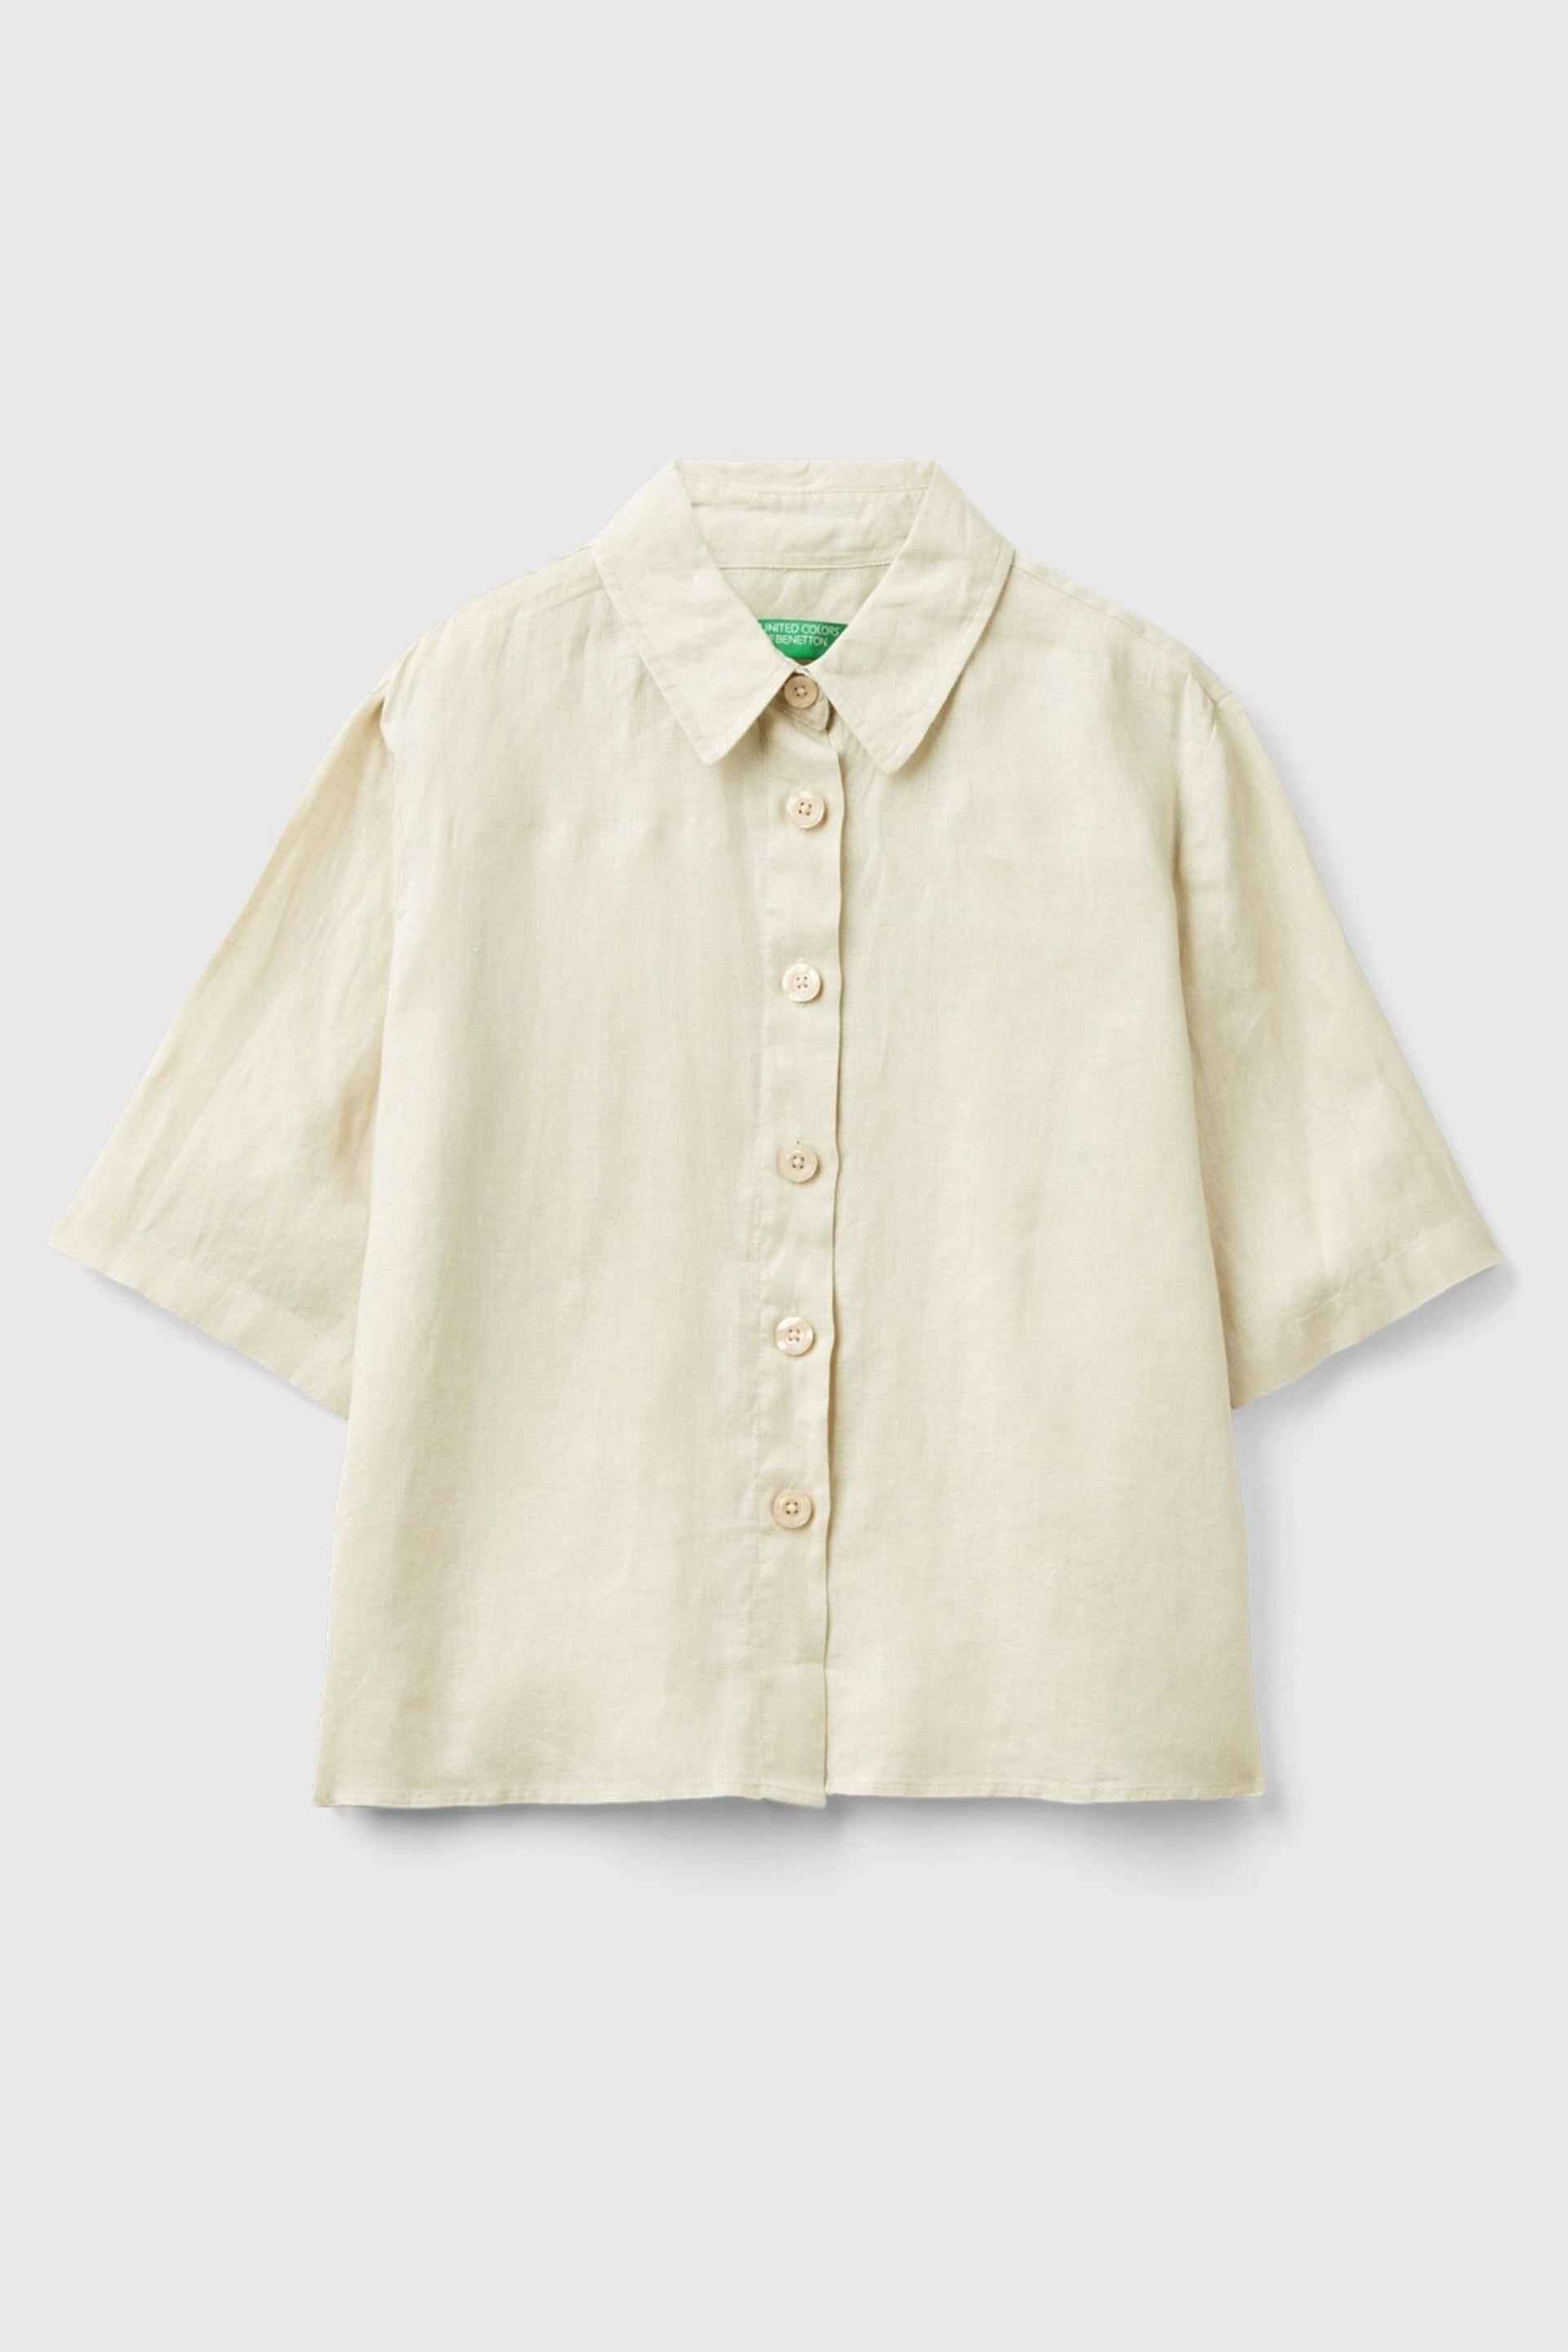 Benetton Linen Shirt - Image 3 of 3